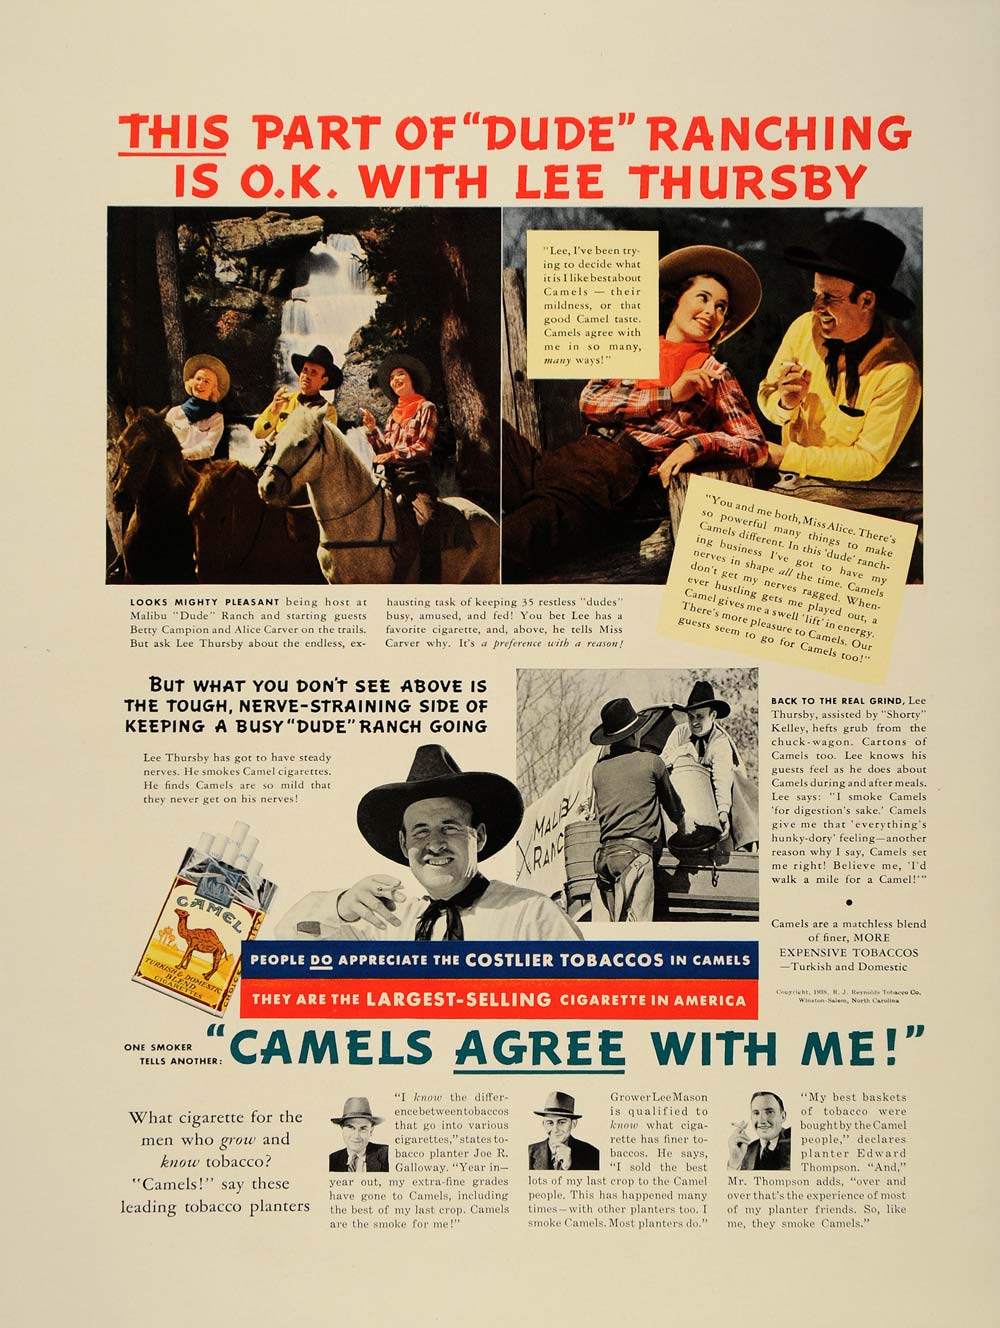 1938 Ad Camel Cigarettes Lee Thursby Malibu Dude Ranch - ORIGINAL FT7